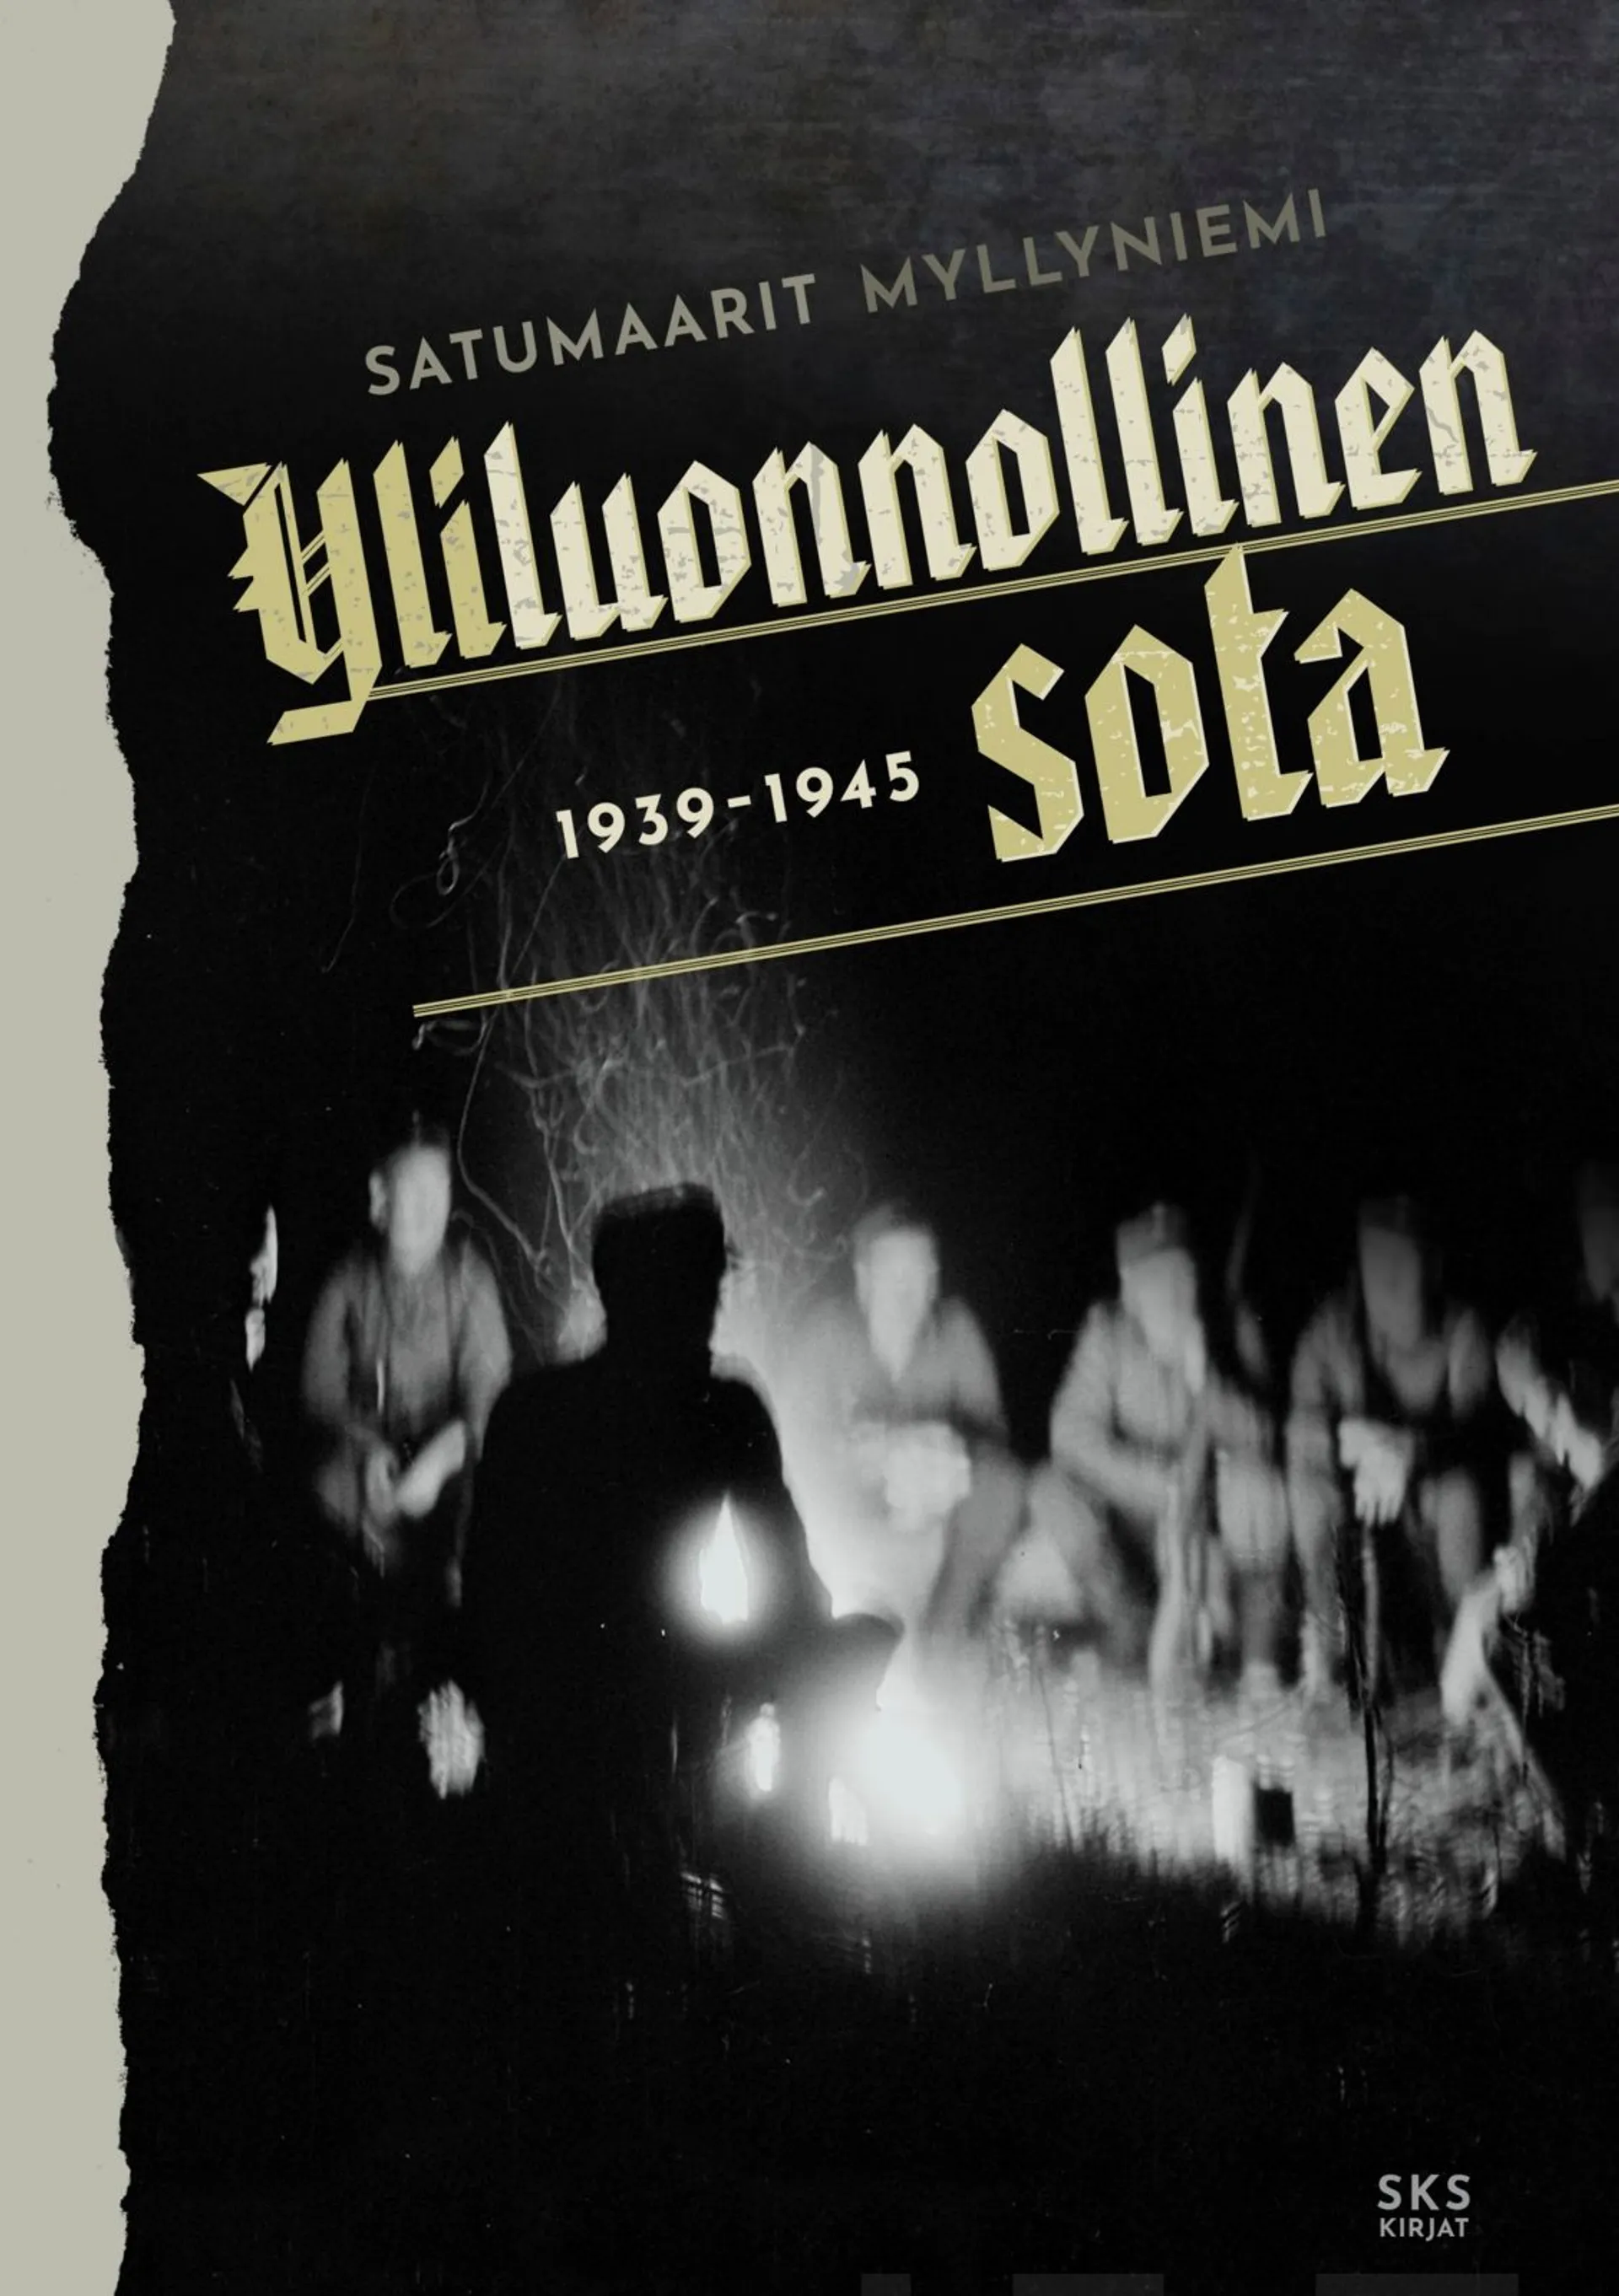 Myllyniemi, Yliluonnollinen sota 1939-1945